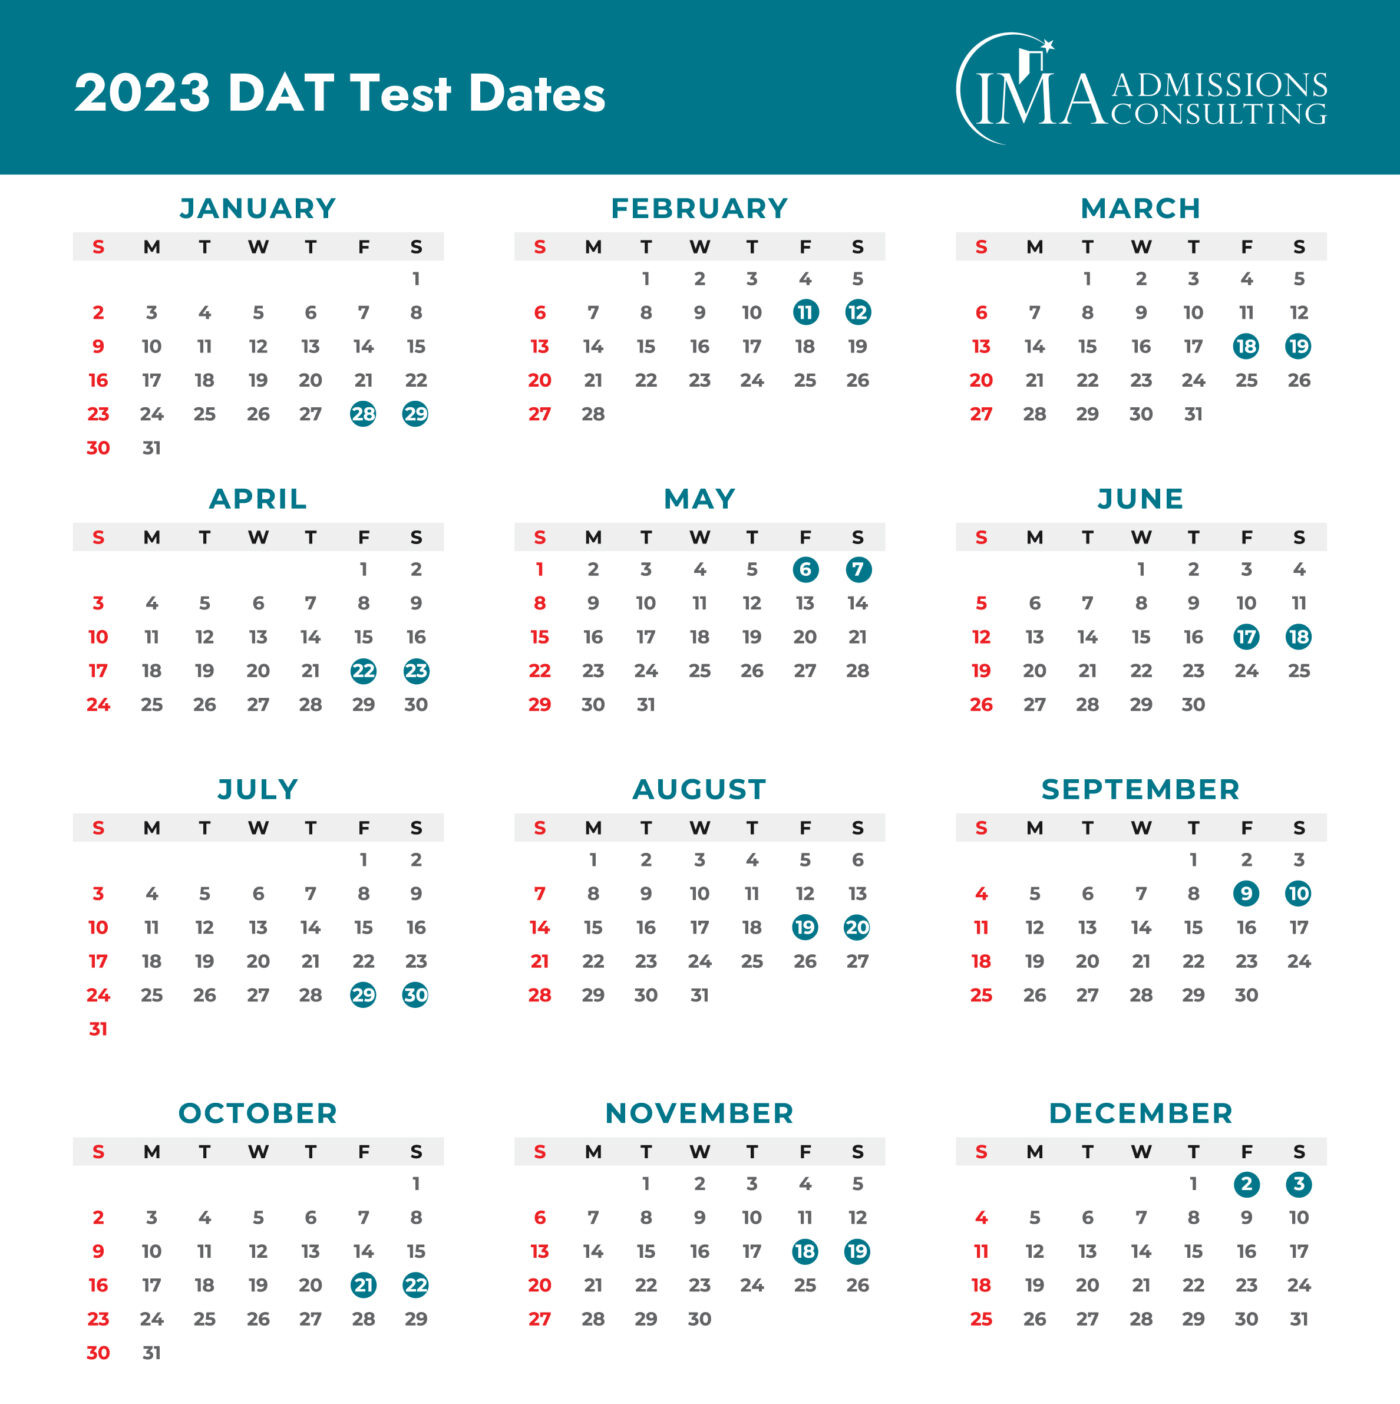 DAT Test Dates 2023​